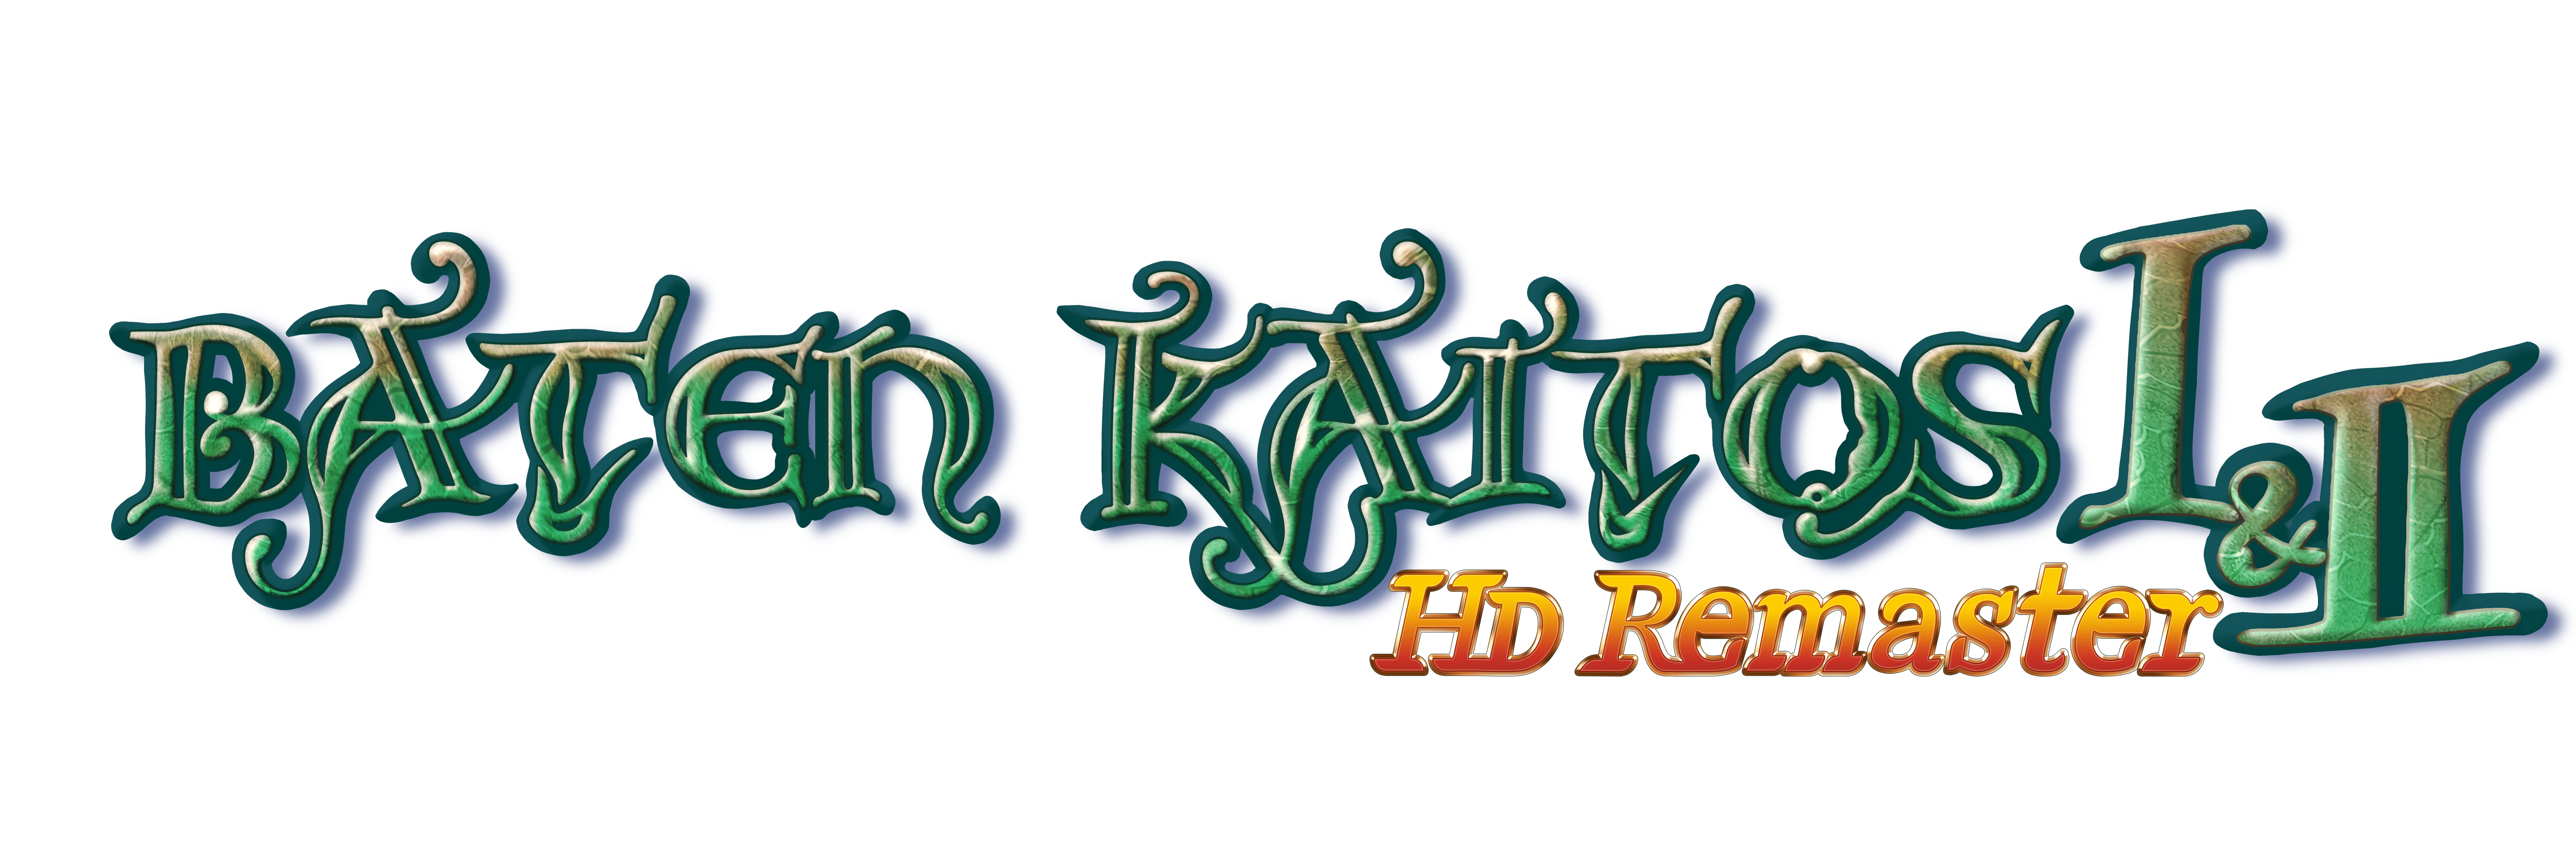 Baten Kaitos I & II HD Remaster announced for Switch - Gematsu